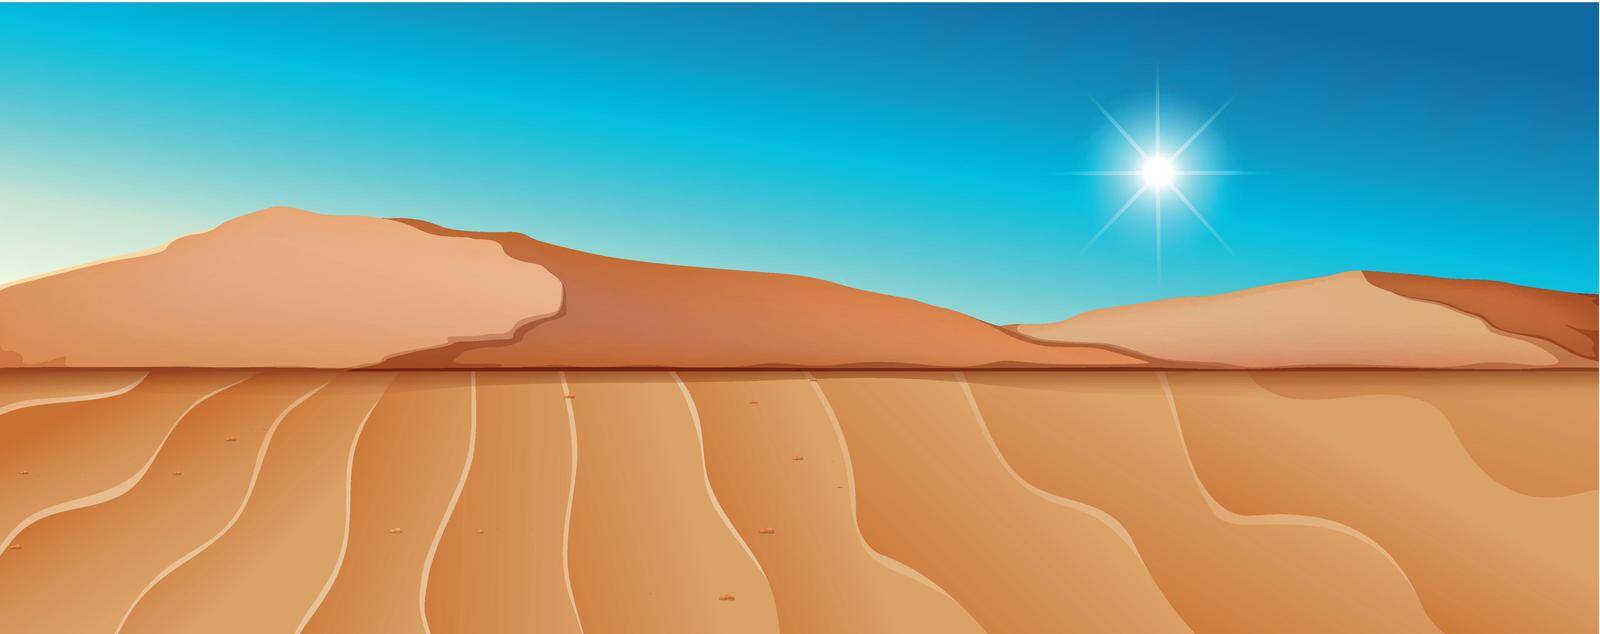 Dry desert landscape scene by iimages